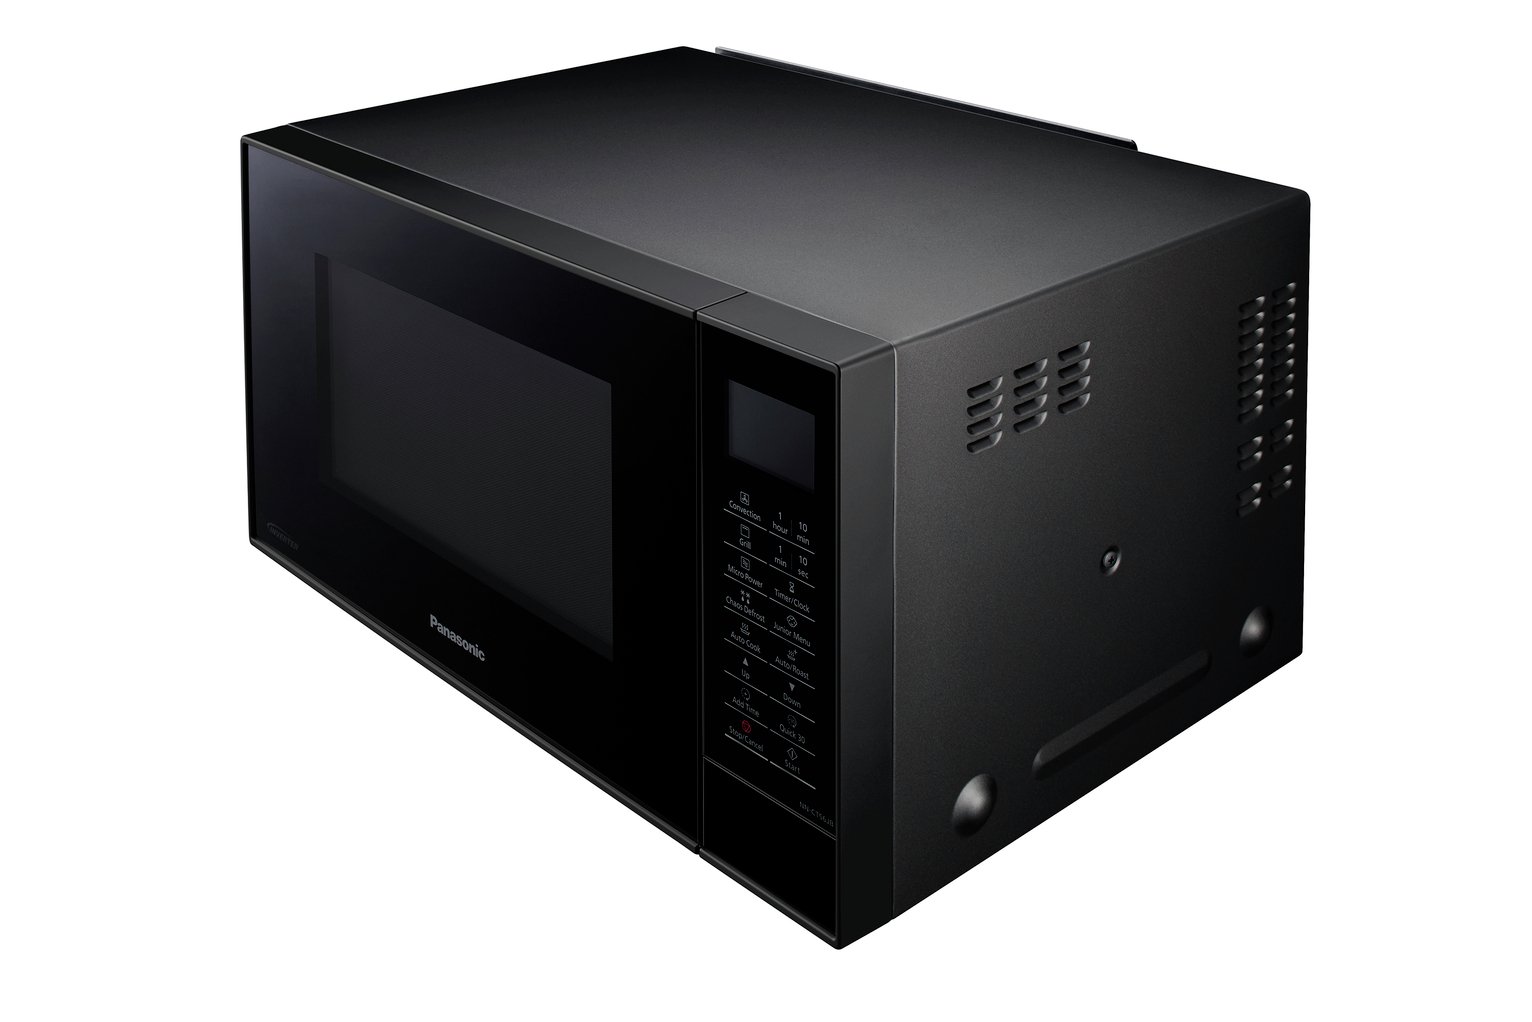 Panasonic 1000w Combination Microwave Nn Ct56 Black Reviews